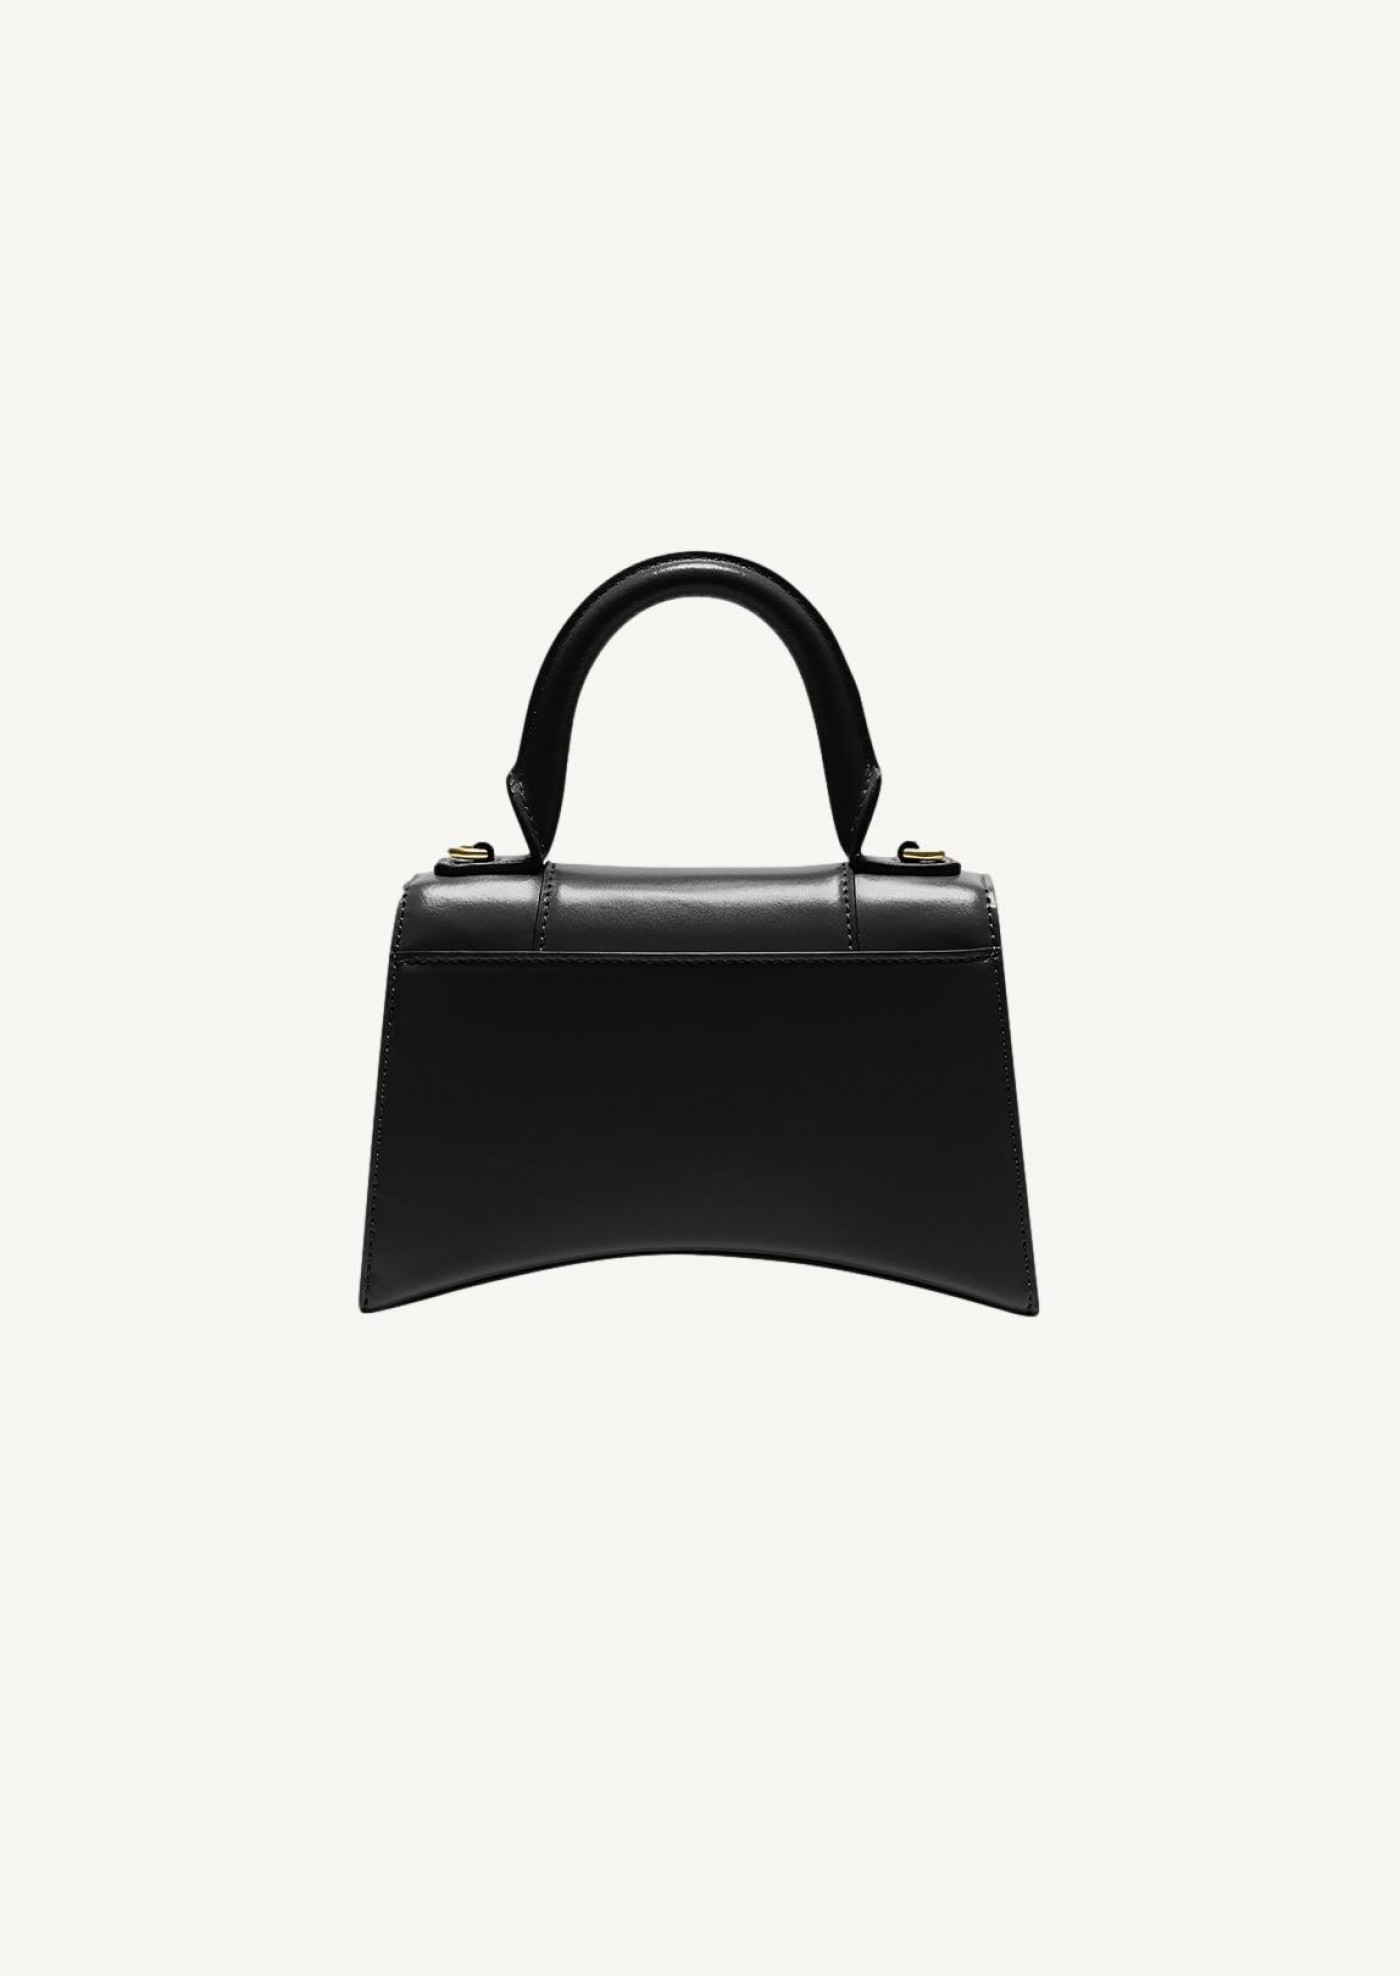 Hourglass Handbag Model XS black